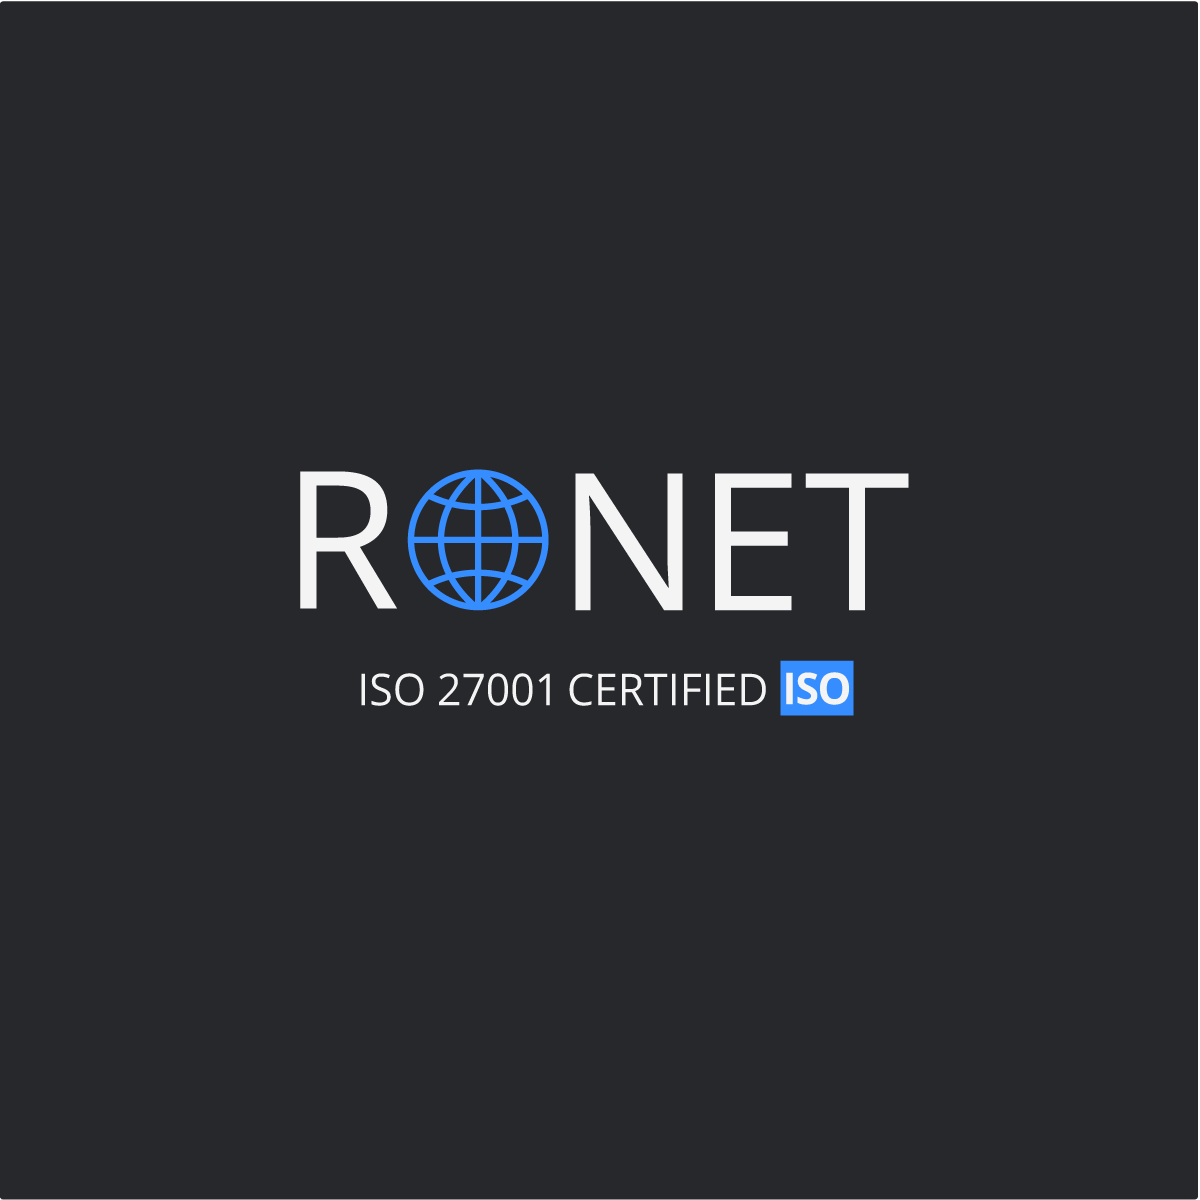 Ronet ISO Certification OpenReel